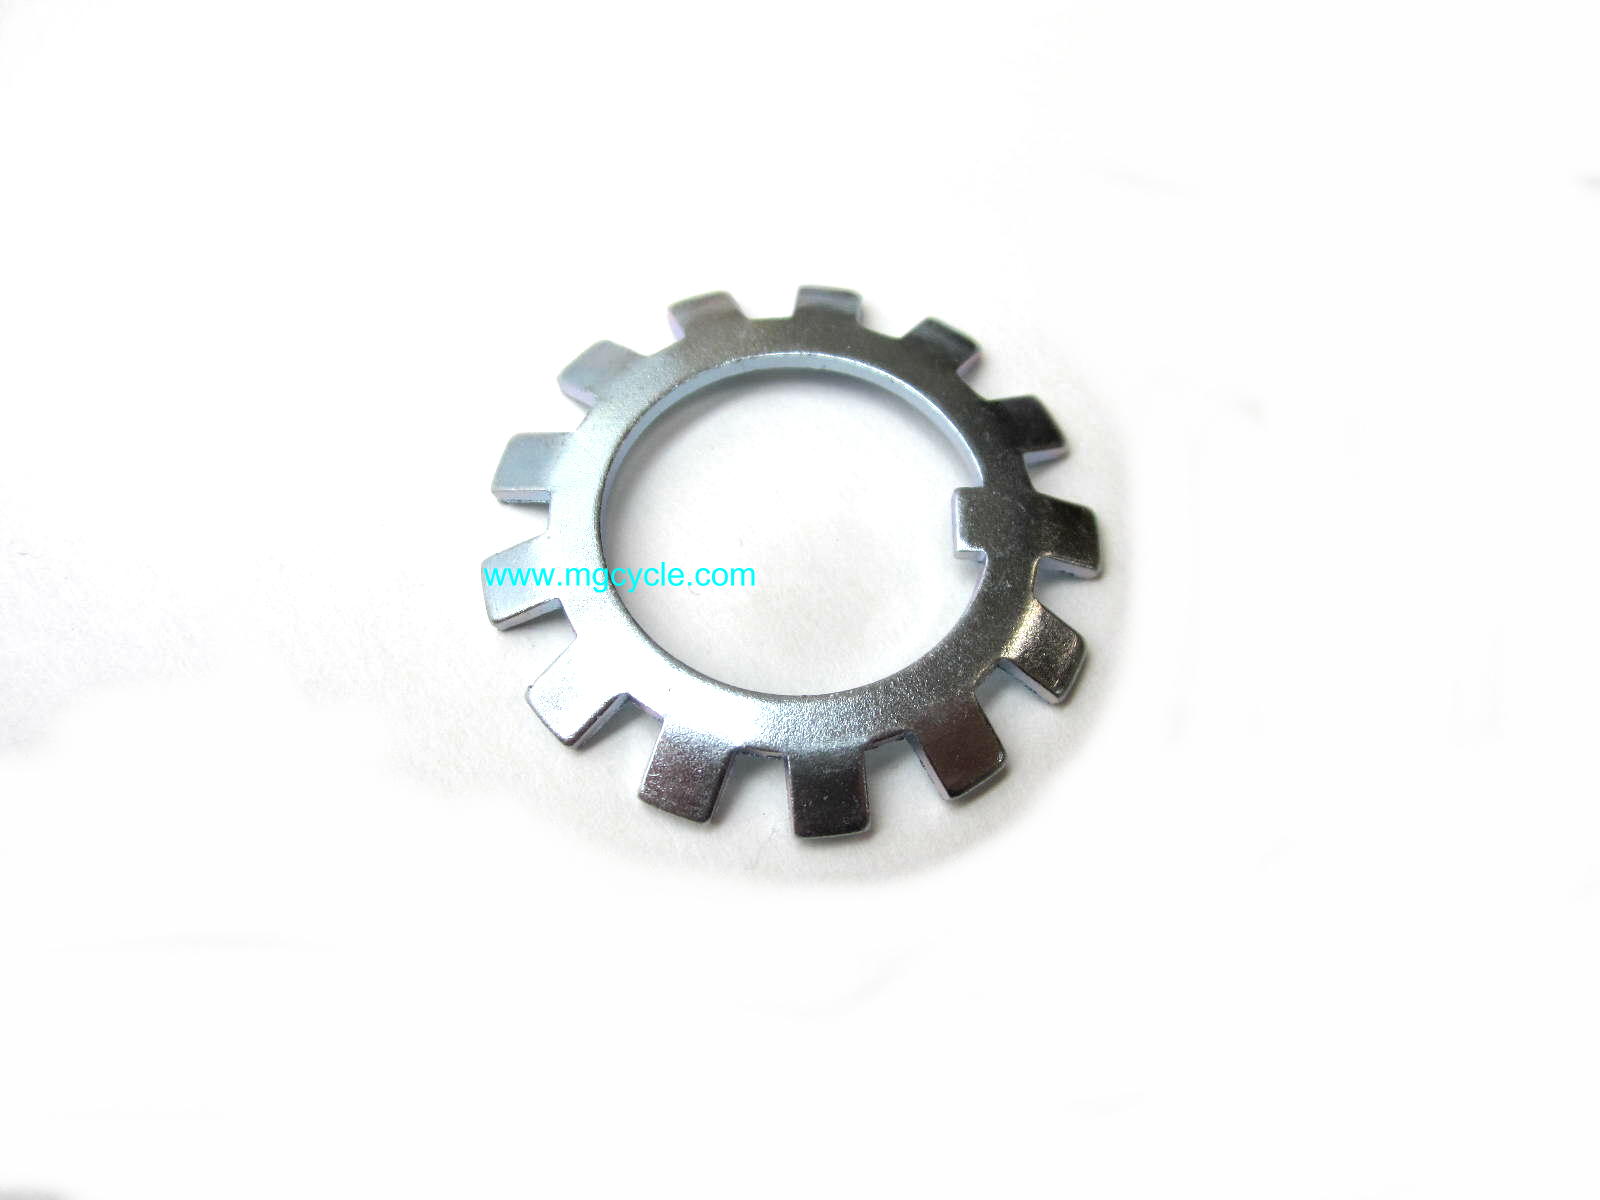 Star washer for crankshaft ring nut, V11 Sport 6 speed input hub - Click Image to Close